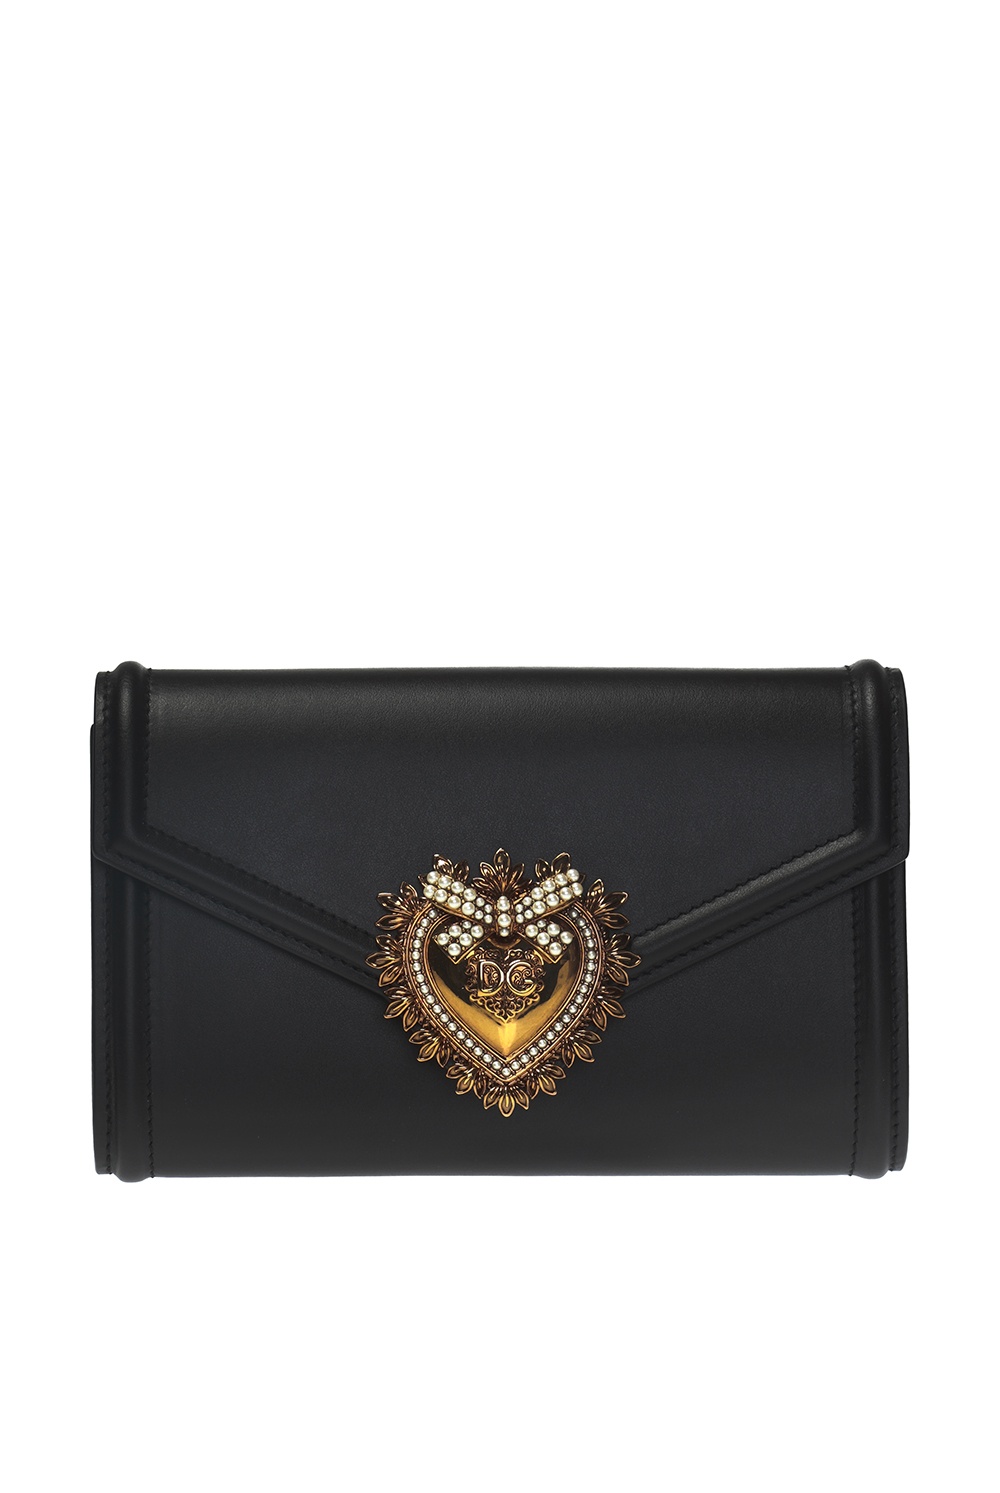 Black 'Devotion' belt bag Dolce & Gabbana - Vitkac TW